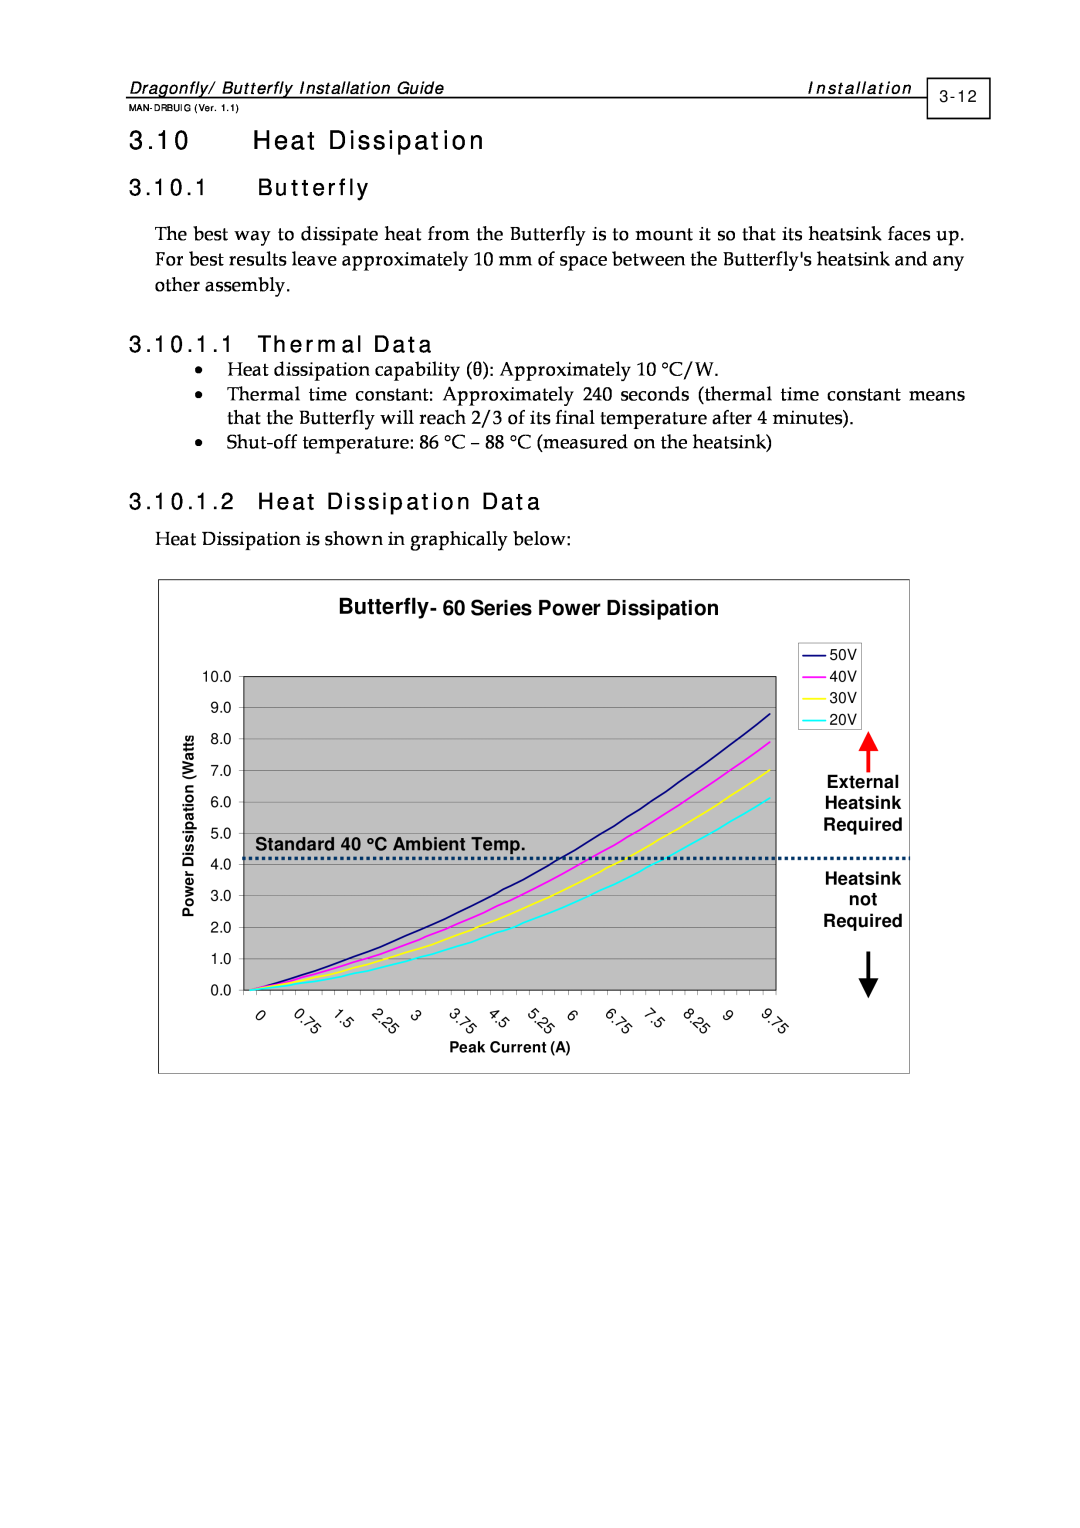 Elmo BUT- X/YYY, DRA- X/YY, ExtrIQ Dragonfly/Butterfly manual Thermal Data, Heat Dissipation Data 